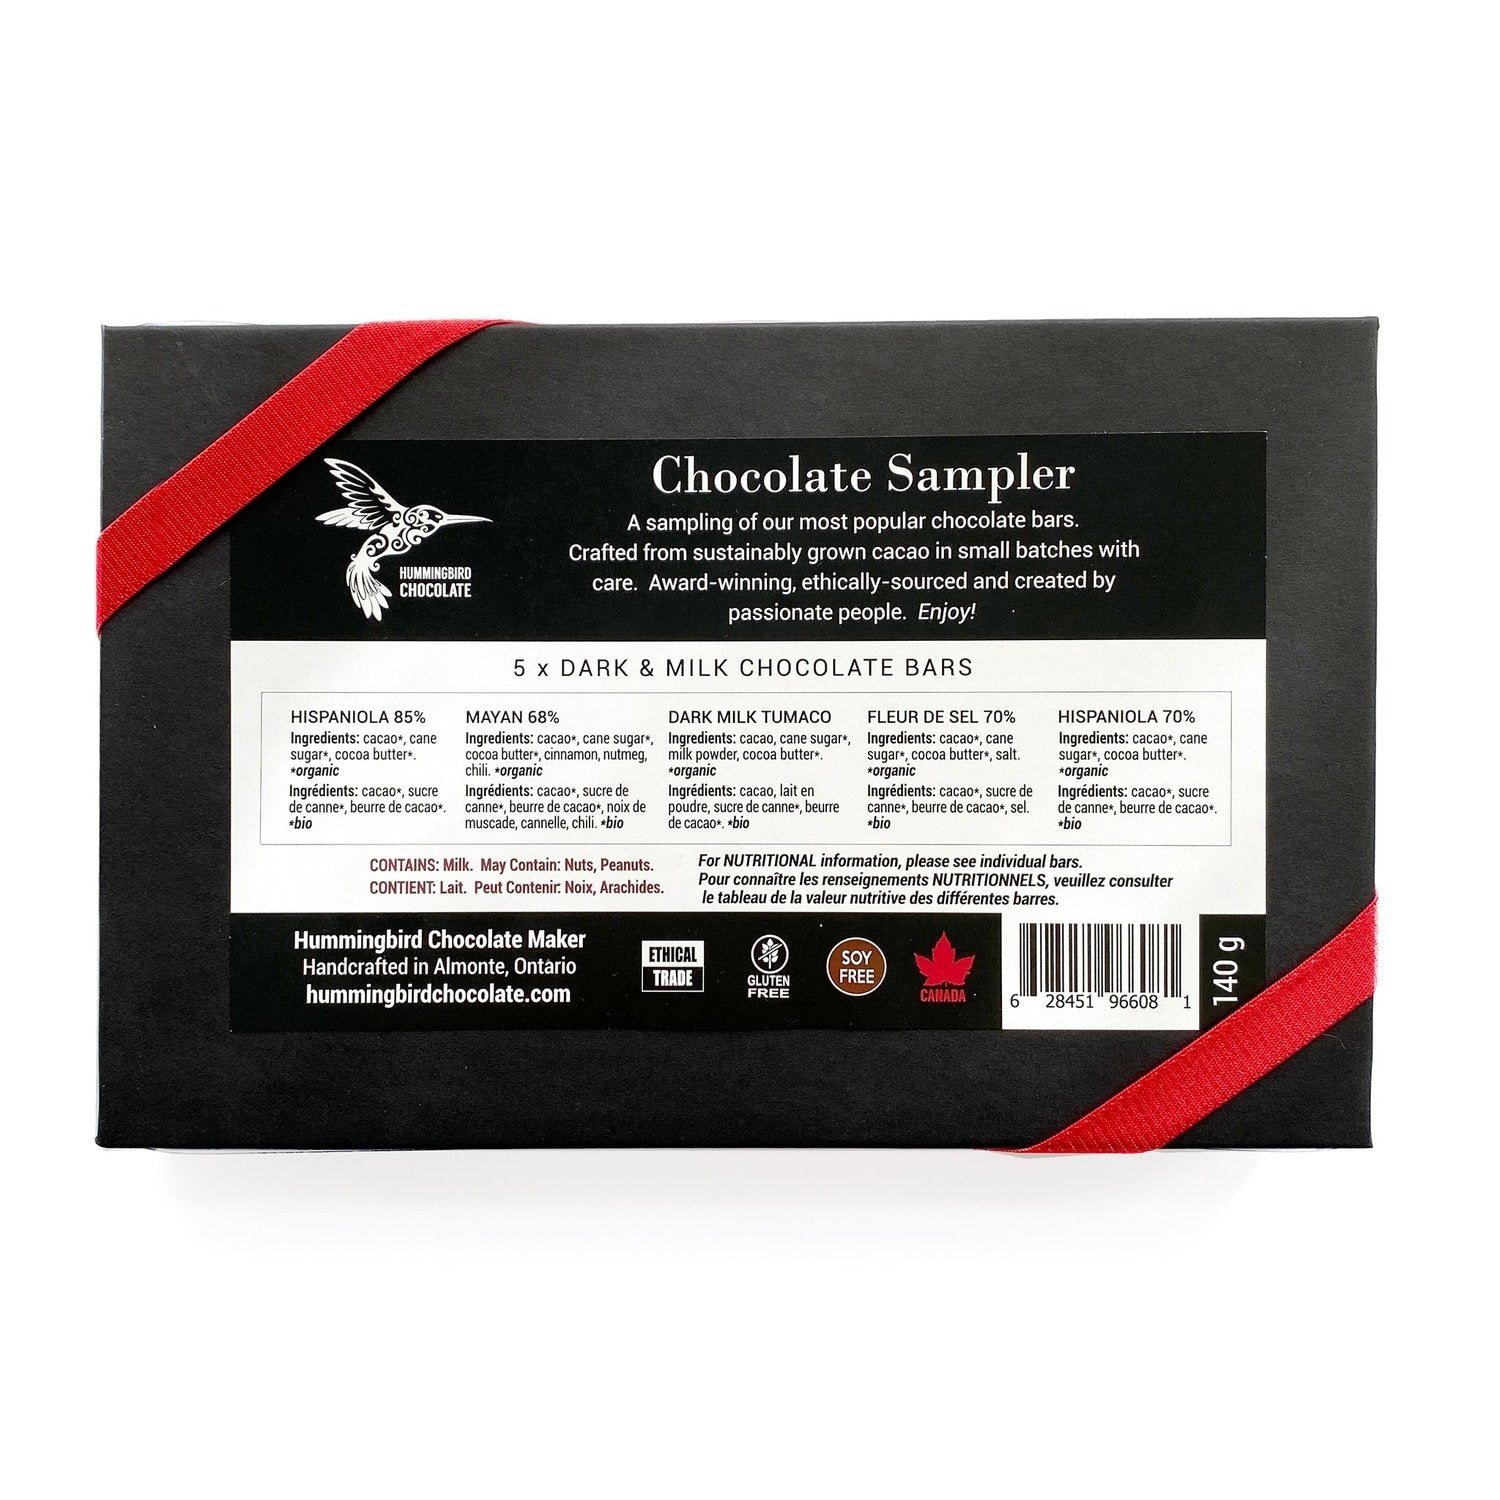 Hummingbird Chocolate Maker, Chocolate Sampler Gift box - Back of box